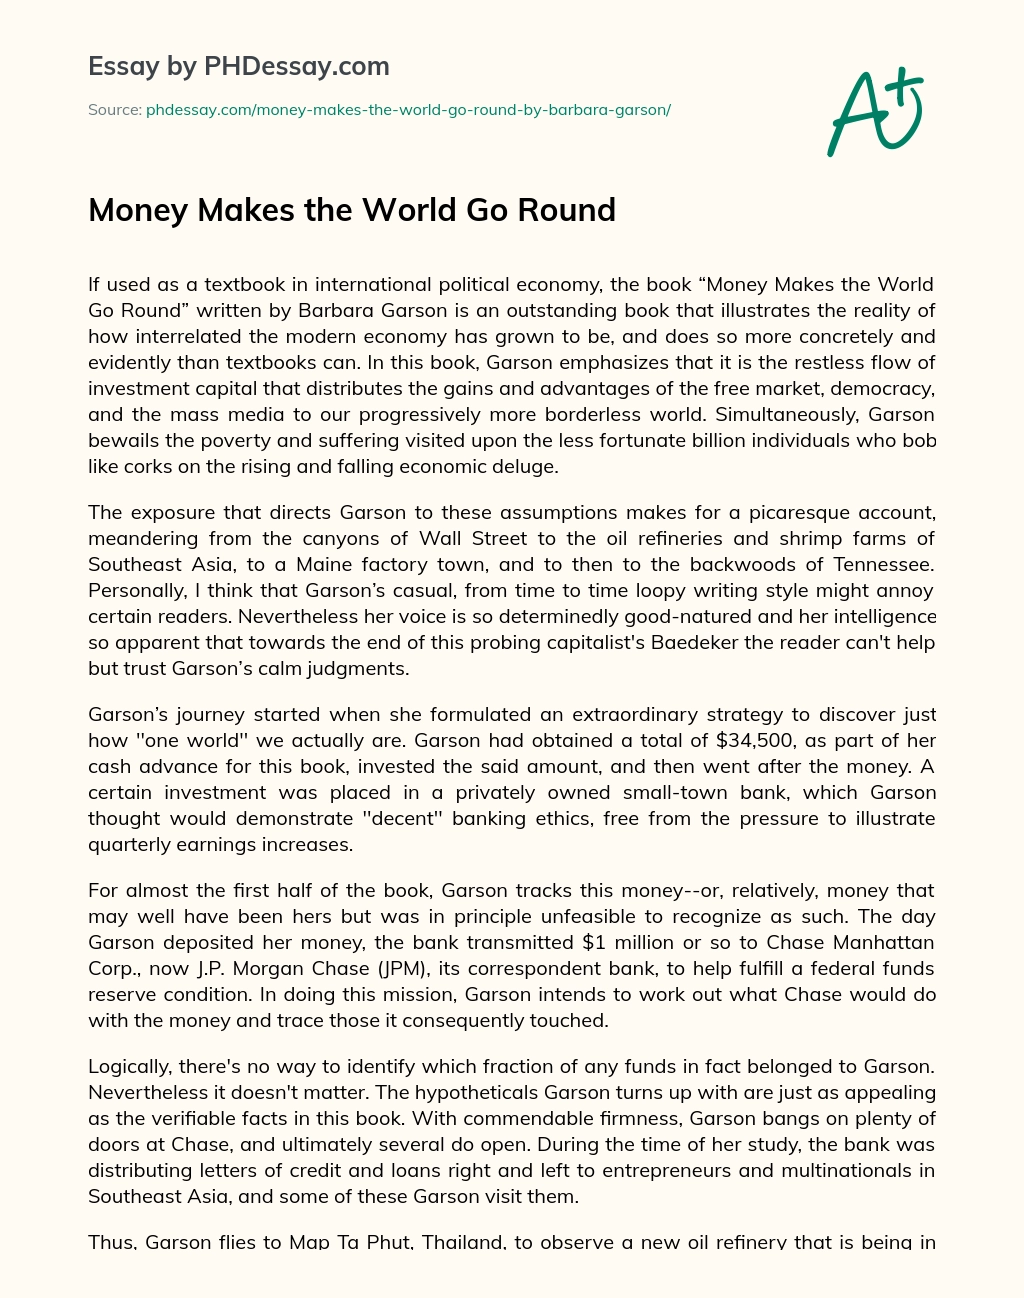 Money Makes the World Go Round essay